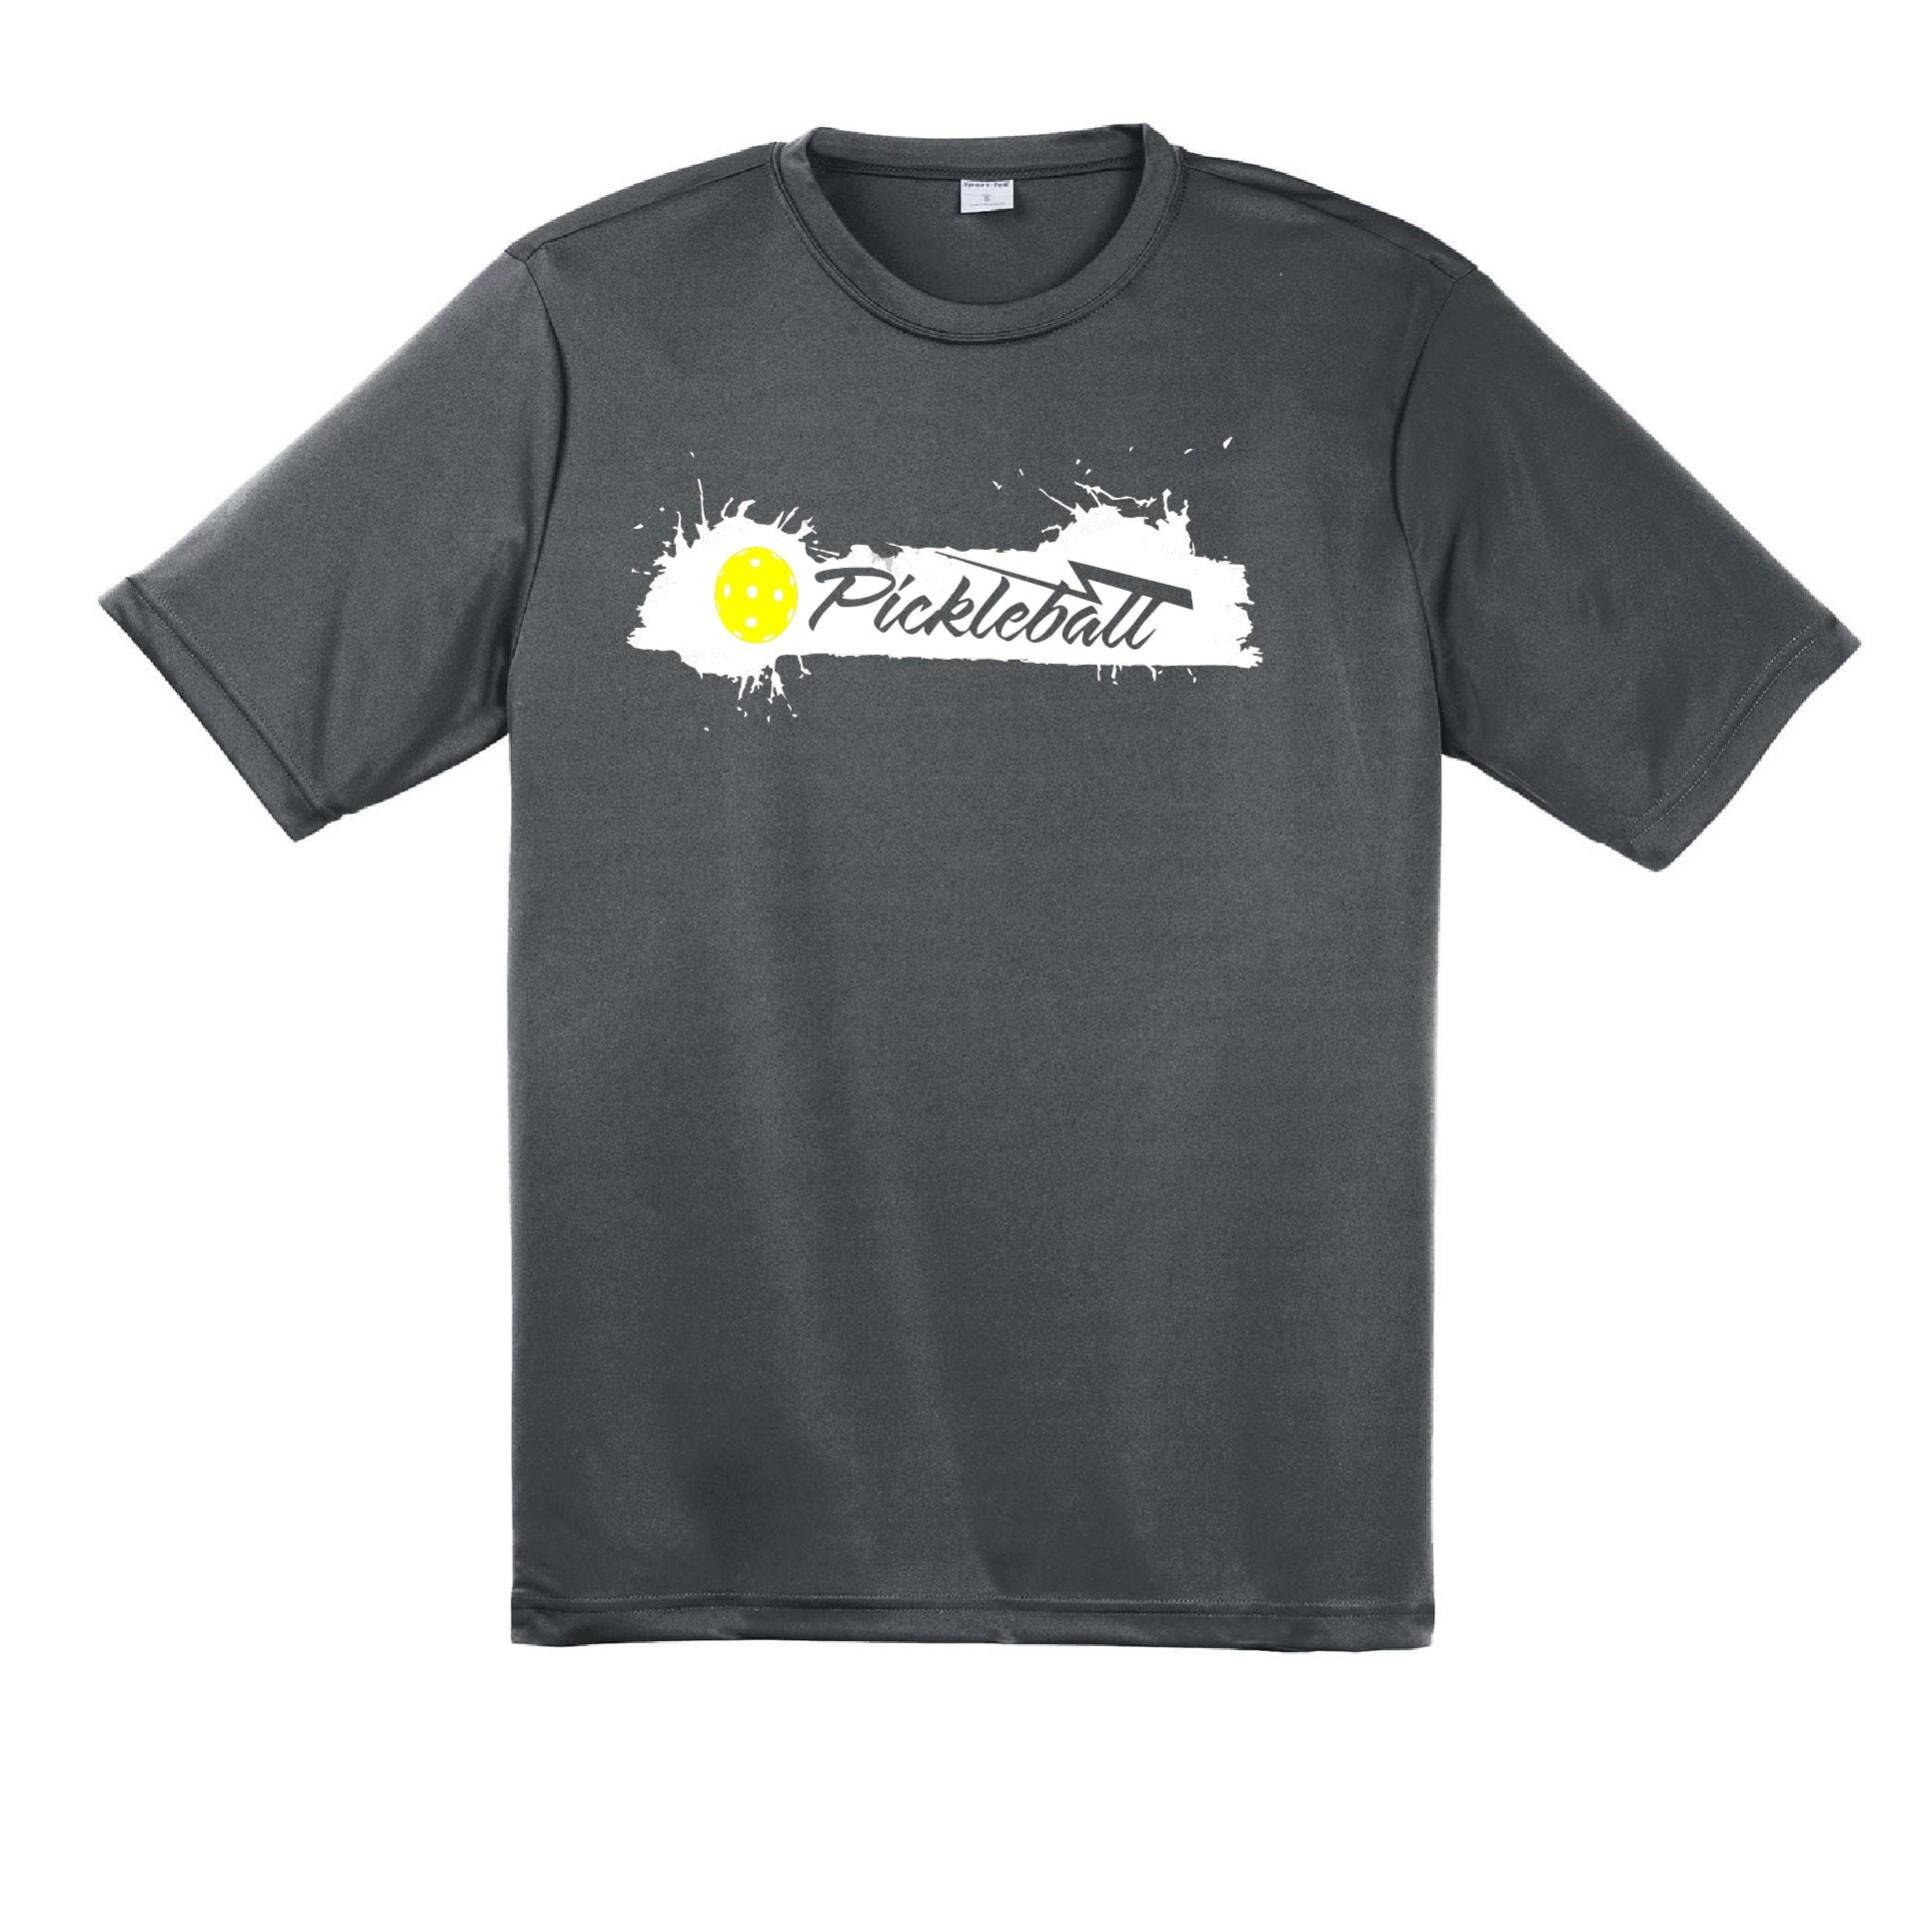 Extreme Pickleball Shirt-Männer T-Shirt-Pickleball Kleidung Für Männer ... Spaß Shirts von DinkDinkSmash